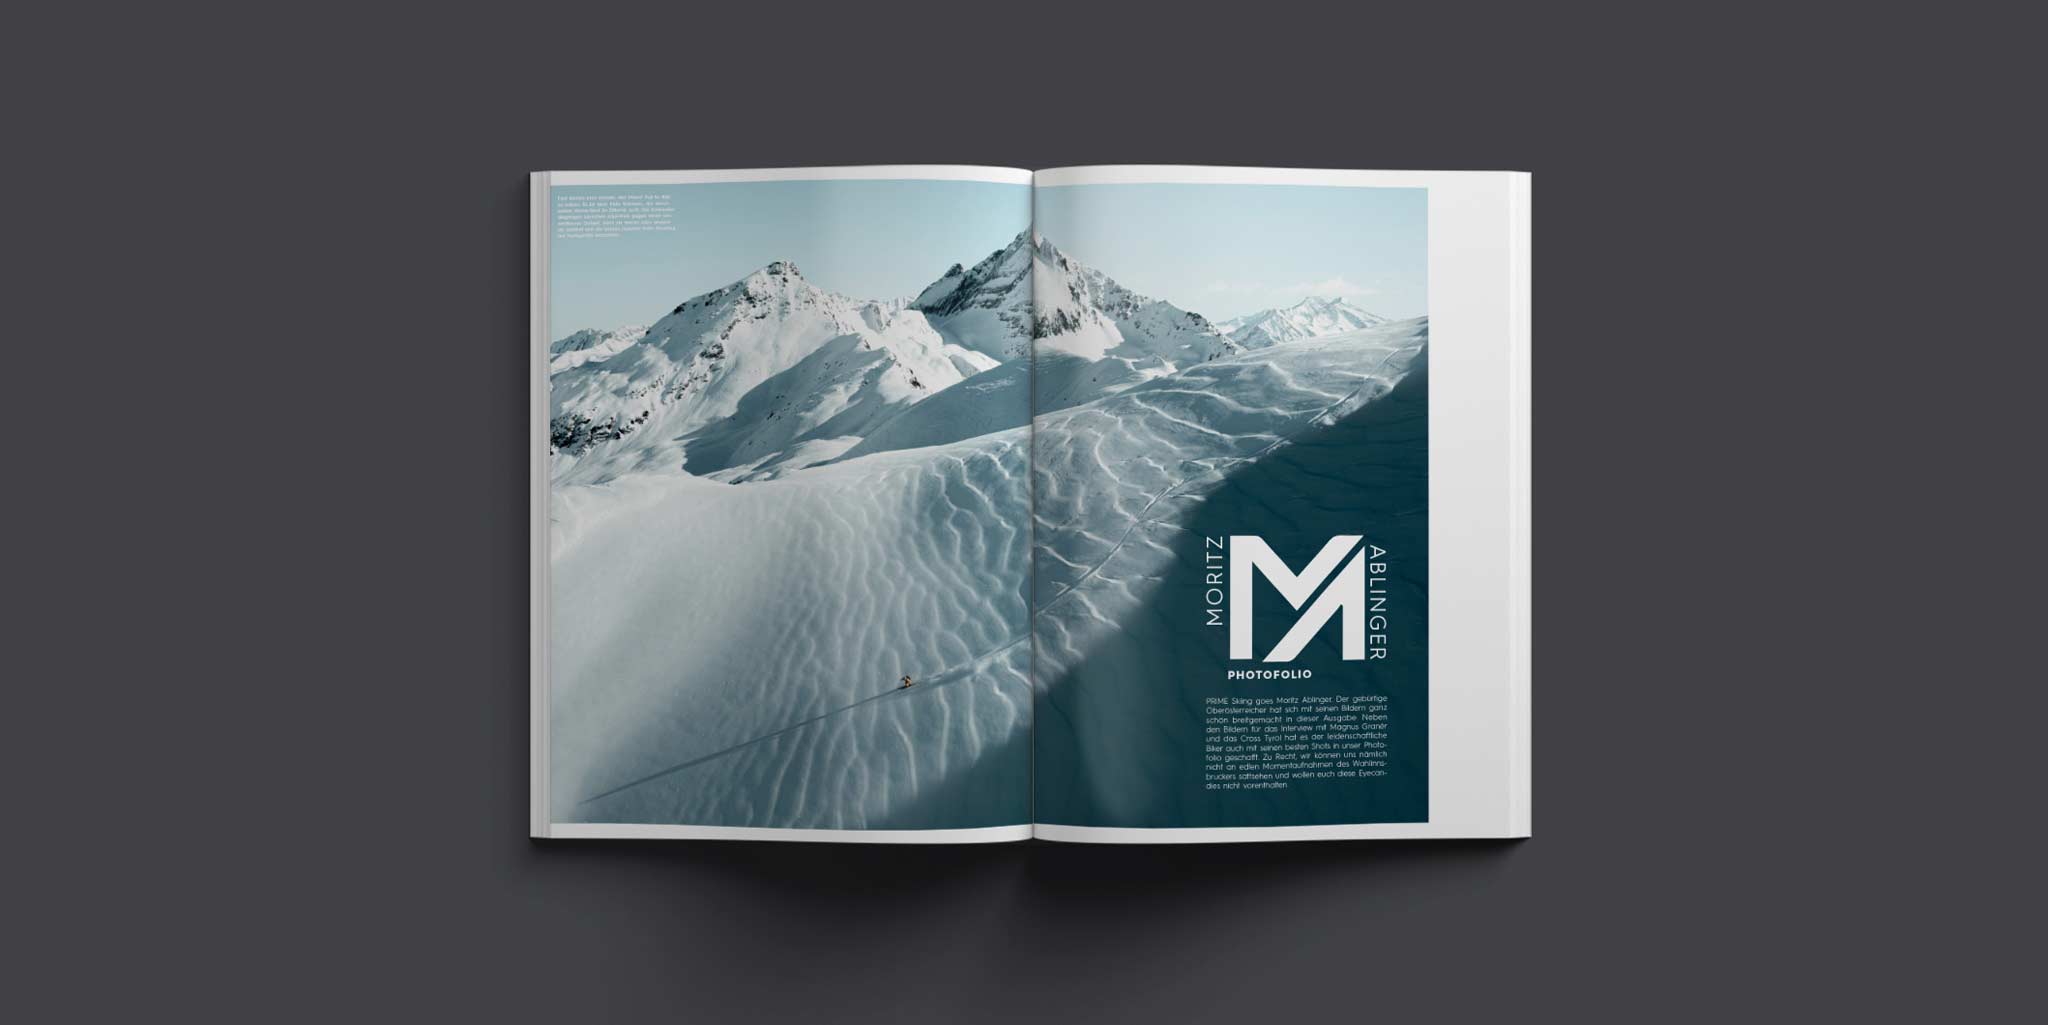 PRIME Skiing Magazin #40 Artikelhighlights: Photofolio - Moritz Ablinger